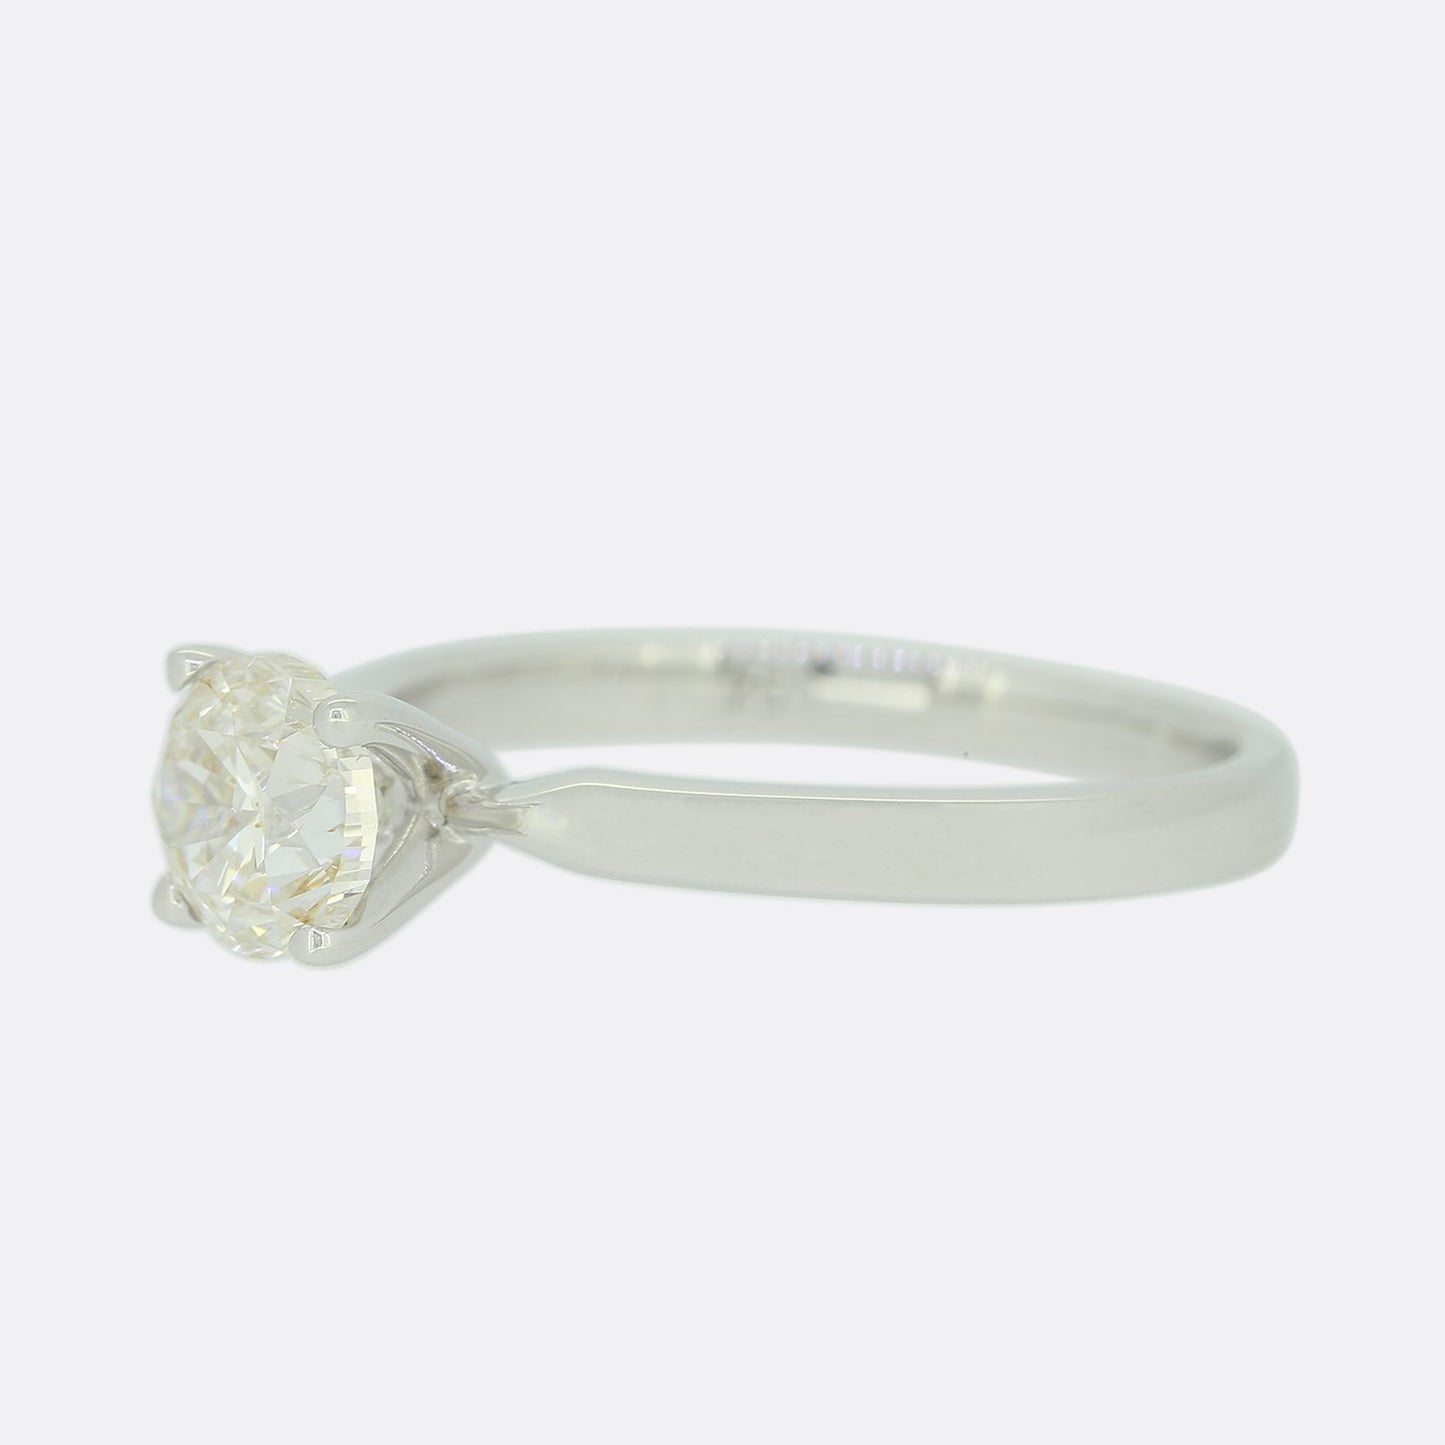 1.02 Carat Diamond Solitaire Engagement Ring